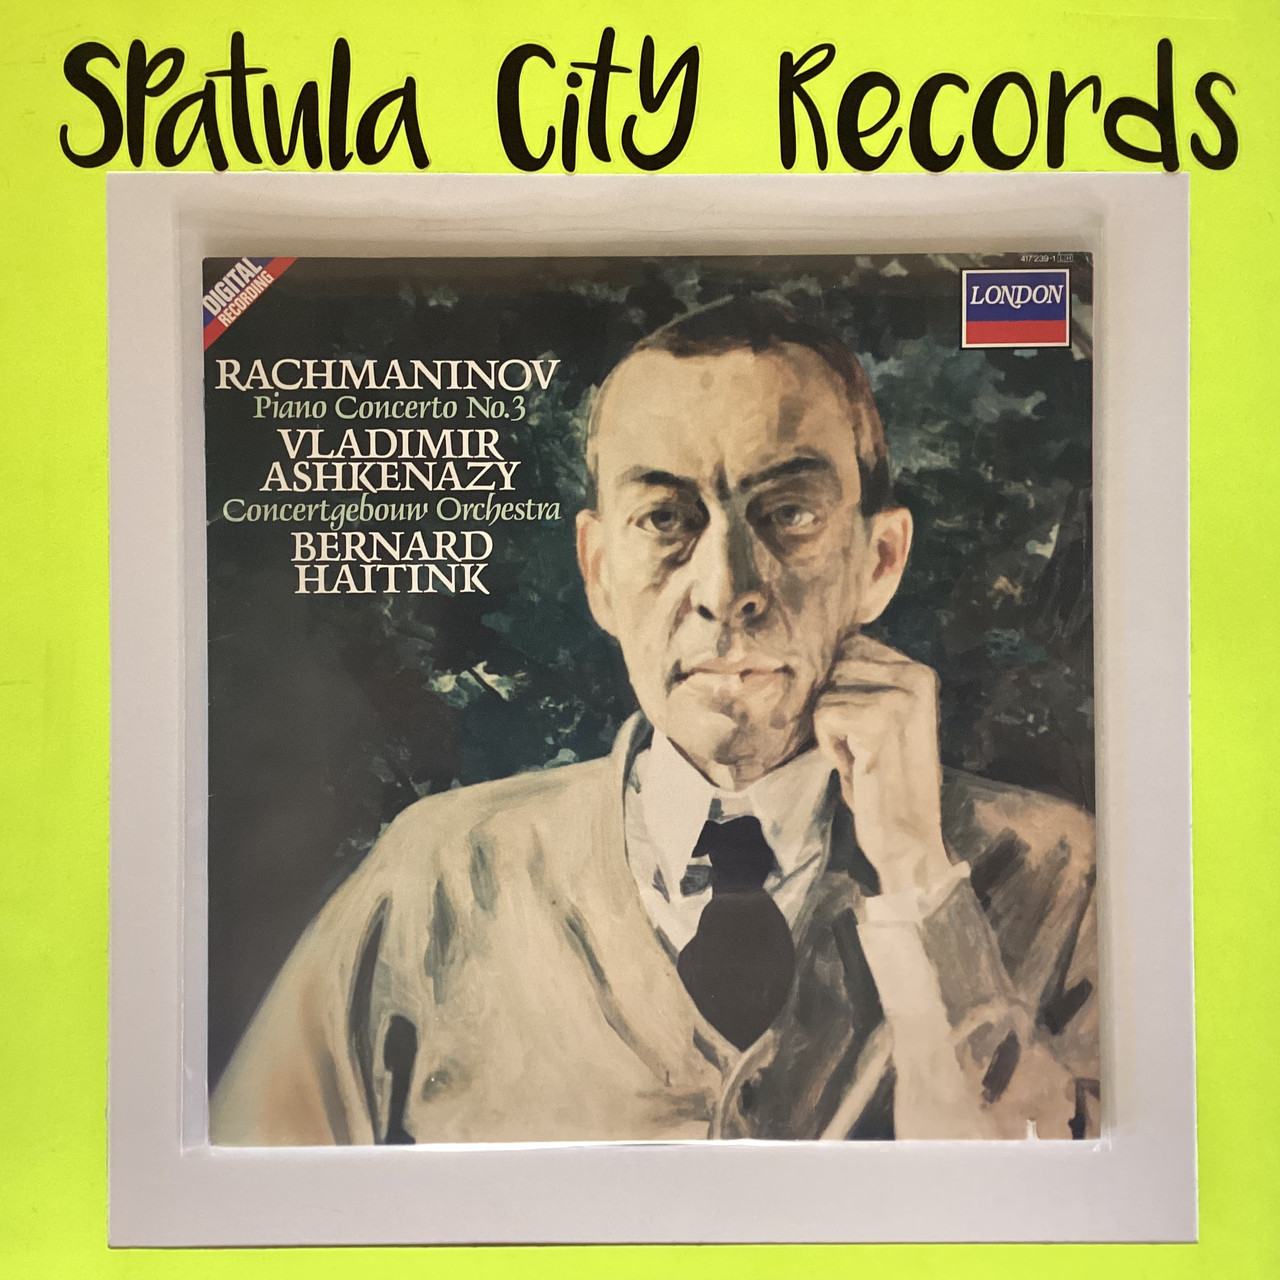 Rachmaninov, Vladimir Ashkenazy, Concertgebouw Orchestra, Bernard Haitink – Piano Concerto No. 3 - vinyl record album LP